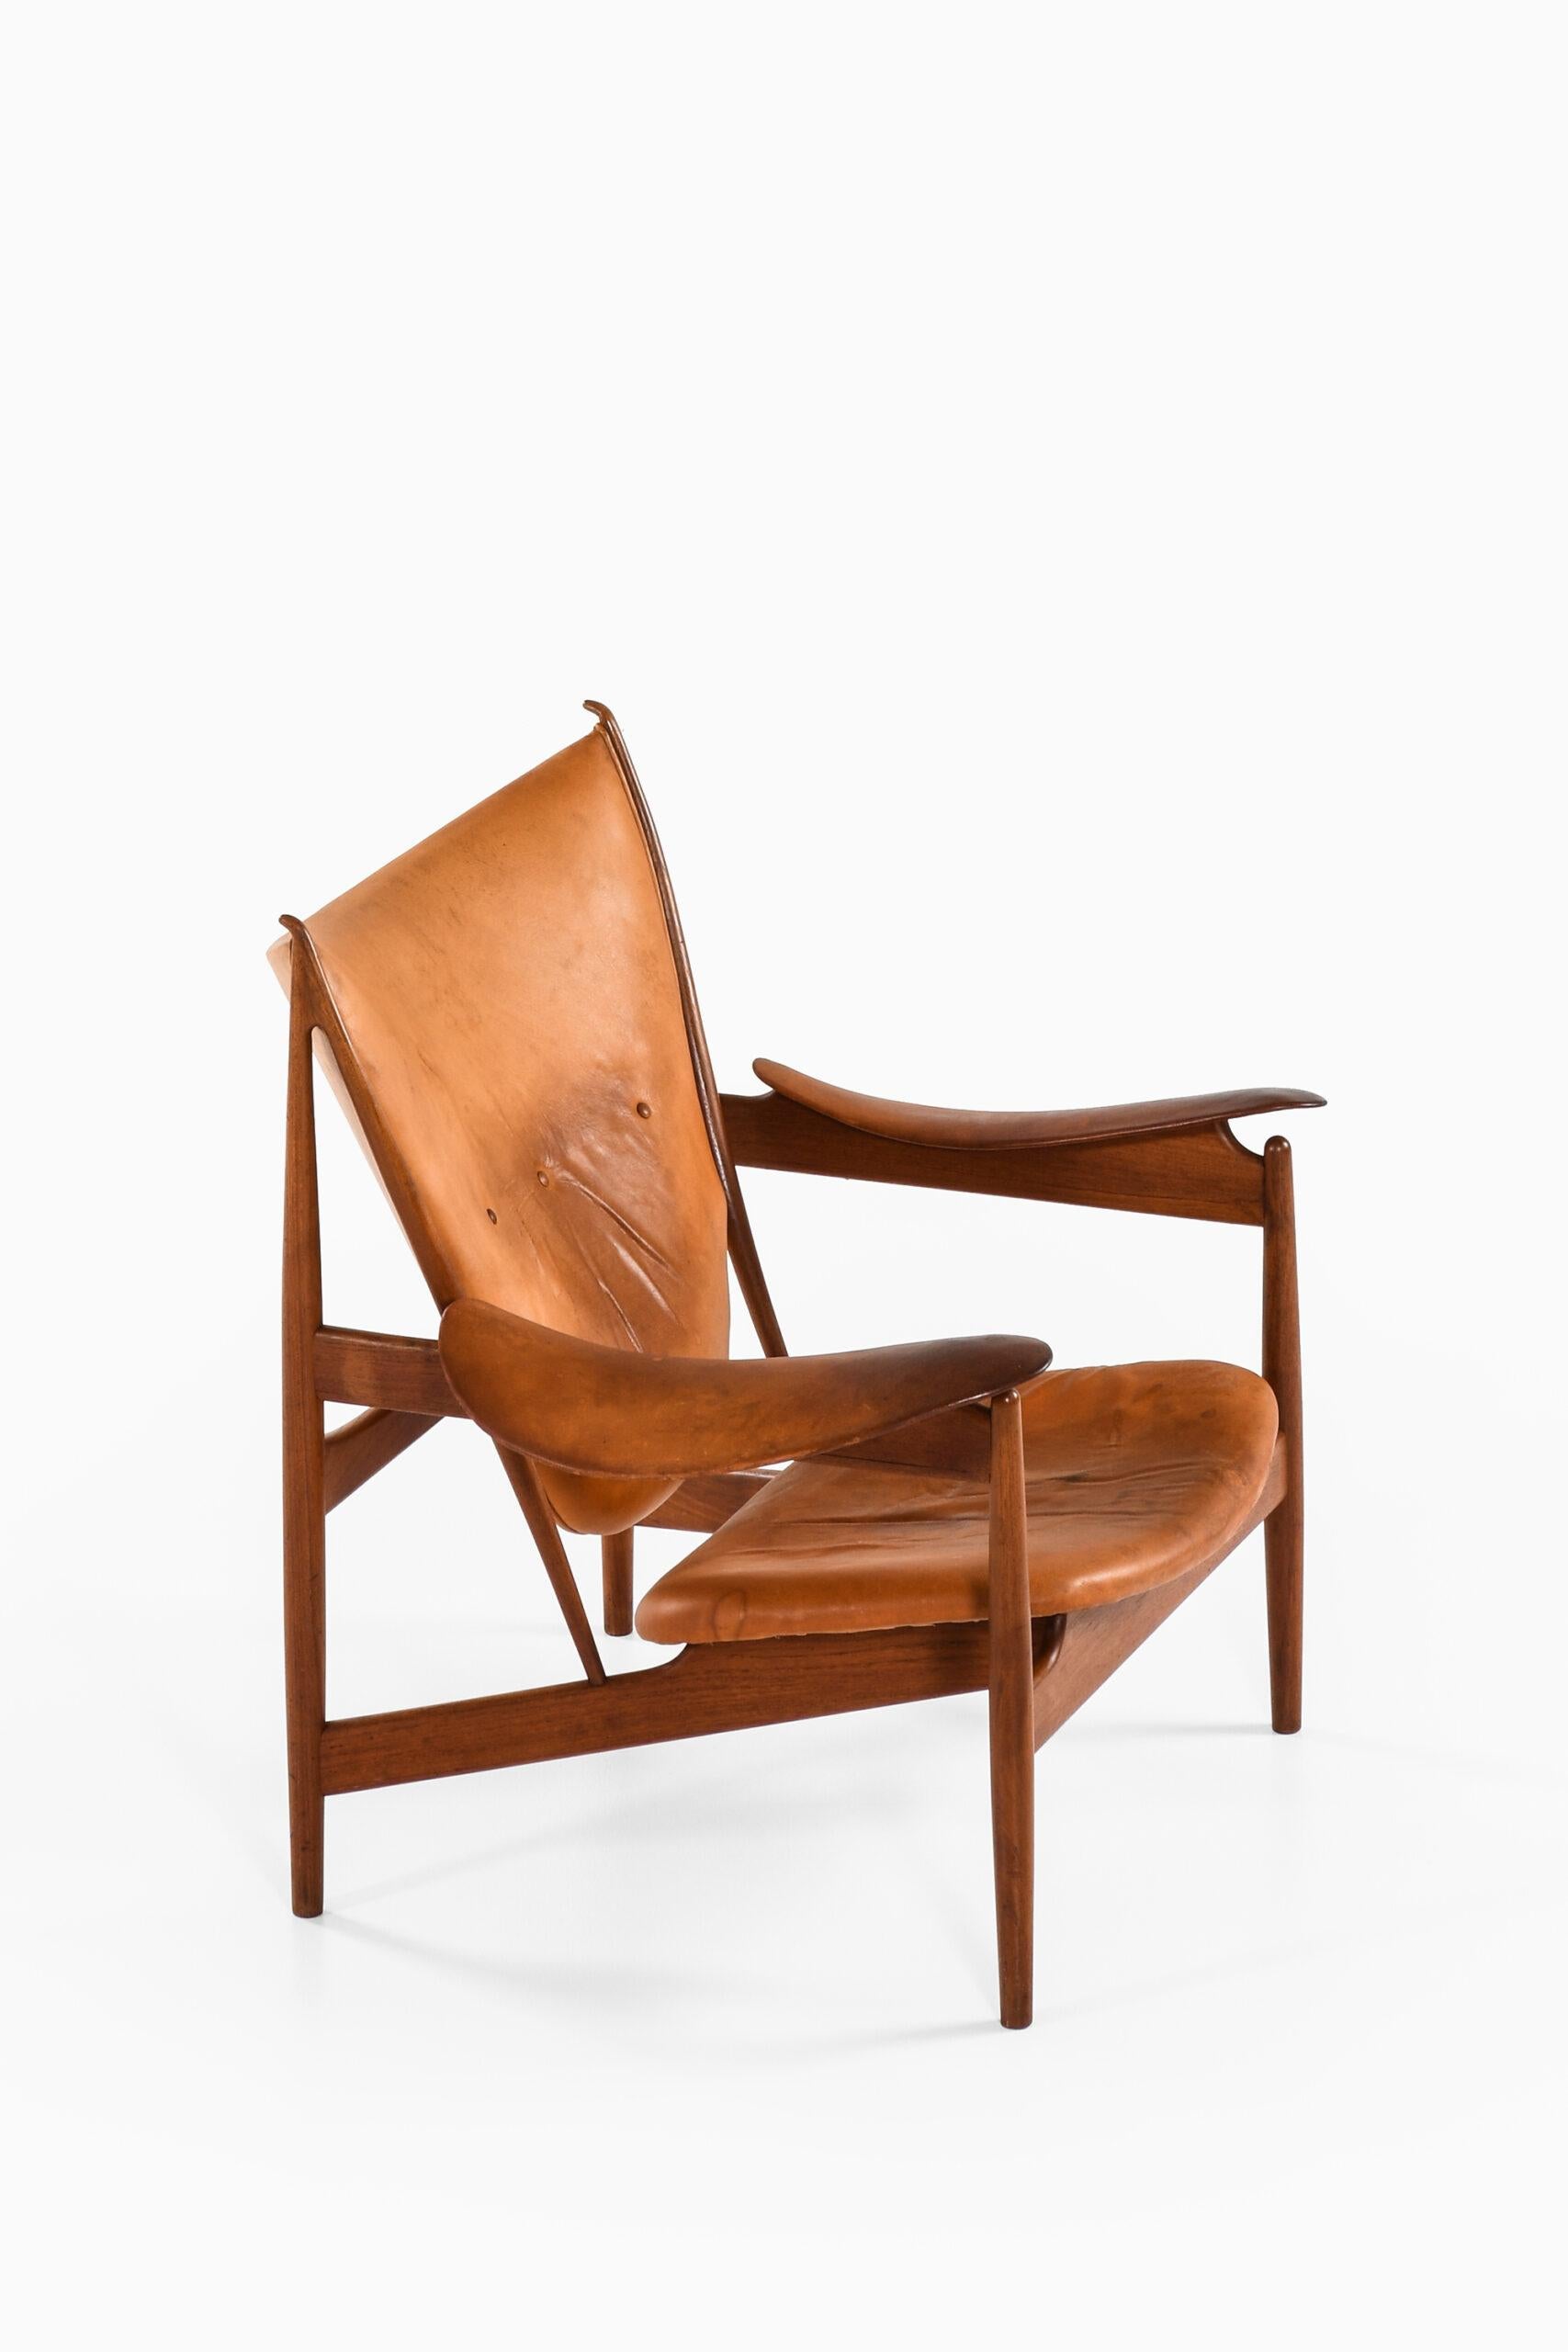 Finn Juhl Chieftain Easy Chair Produced by Cabinetmaker Niels Vodder 6